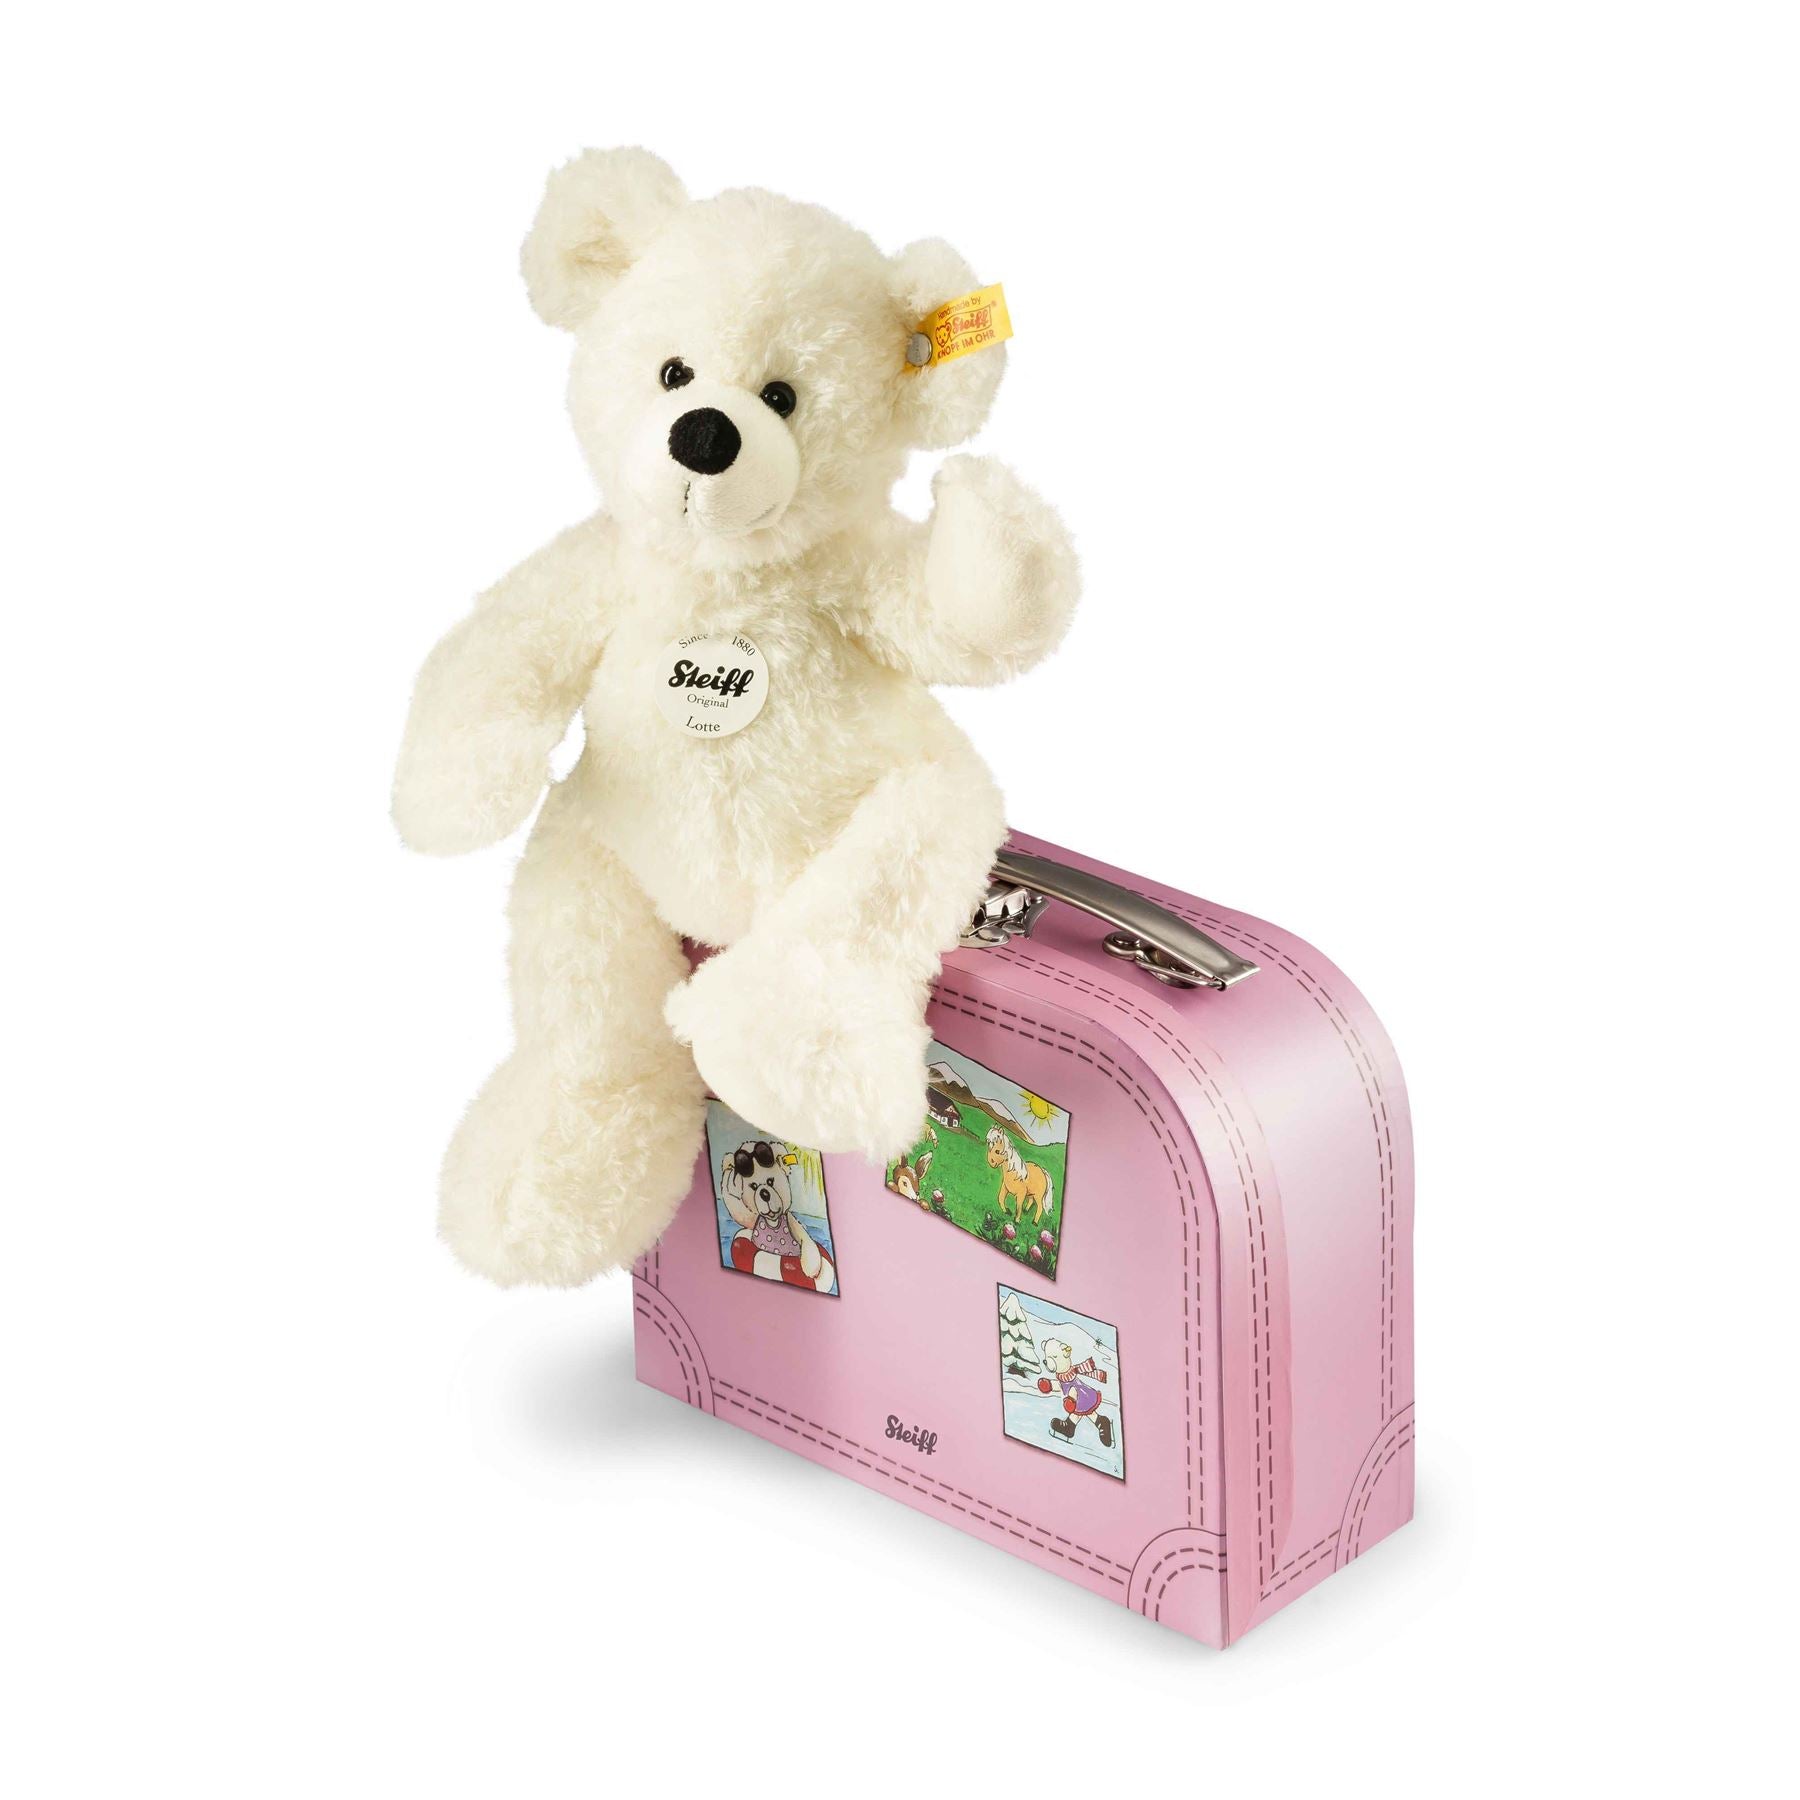 Steiff 28cm White Lotte Teddy Bear in Pink Suitcase